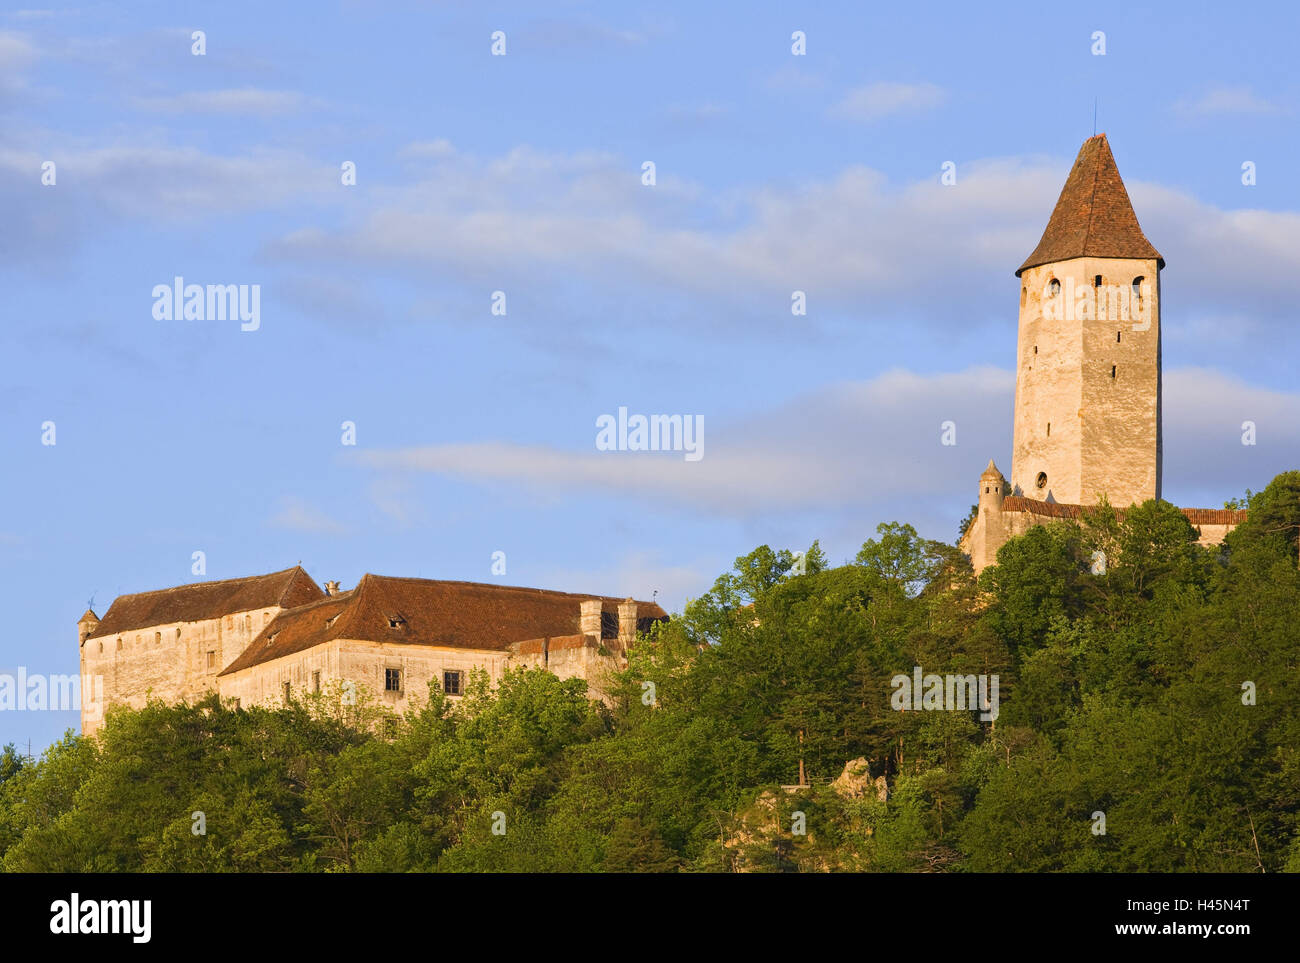 Austria, Lower Austria, castle Seebenstein, Stock Photo